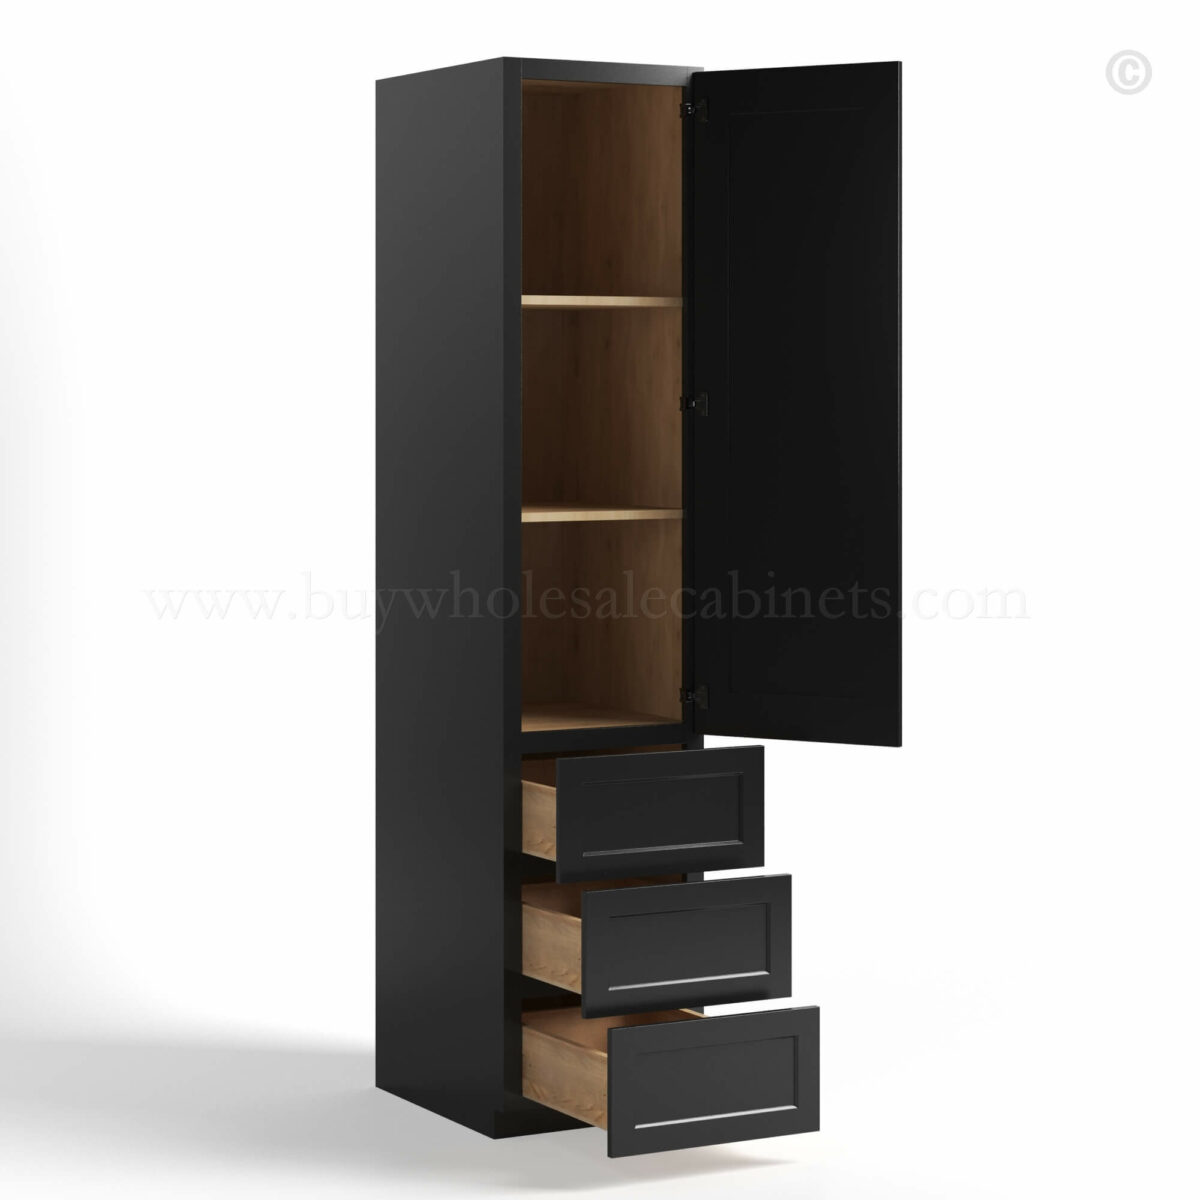 Black Shaker Vanity Linen Cabinet, rta cabinets, wholesale cabinets